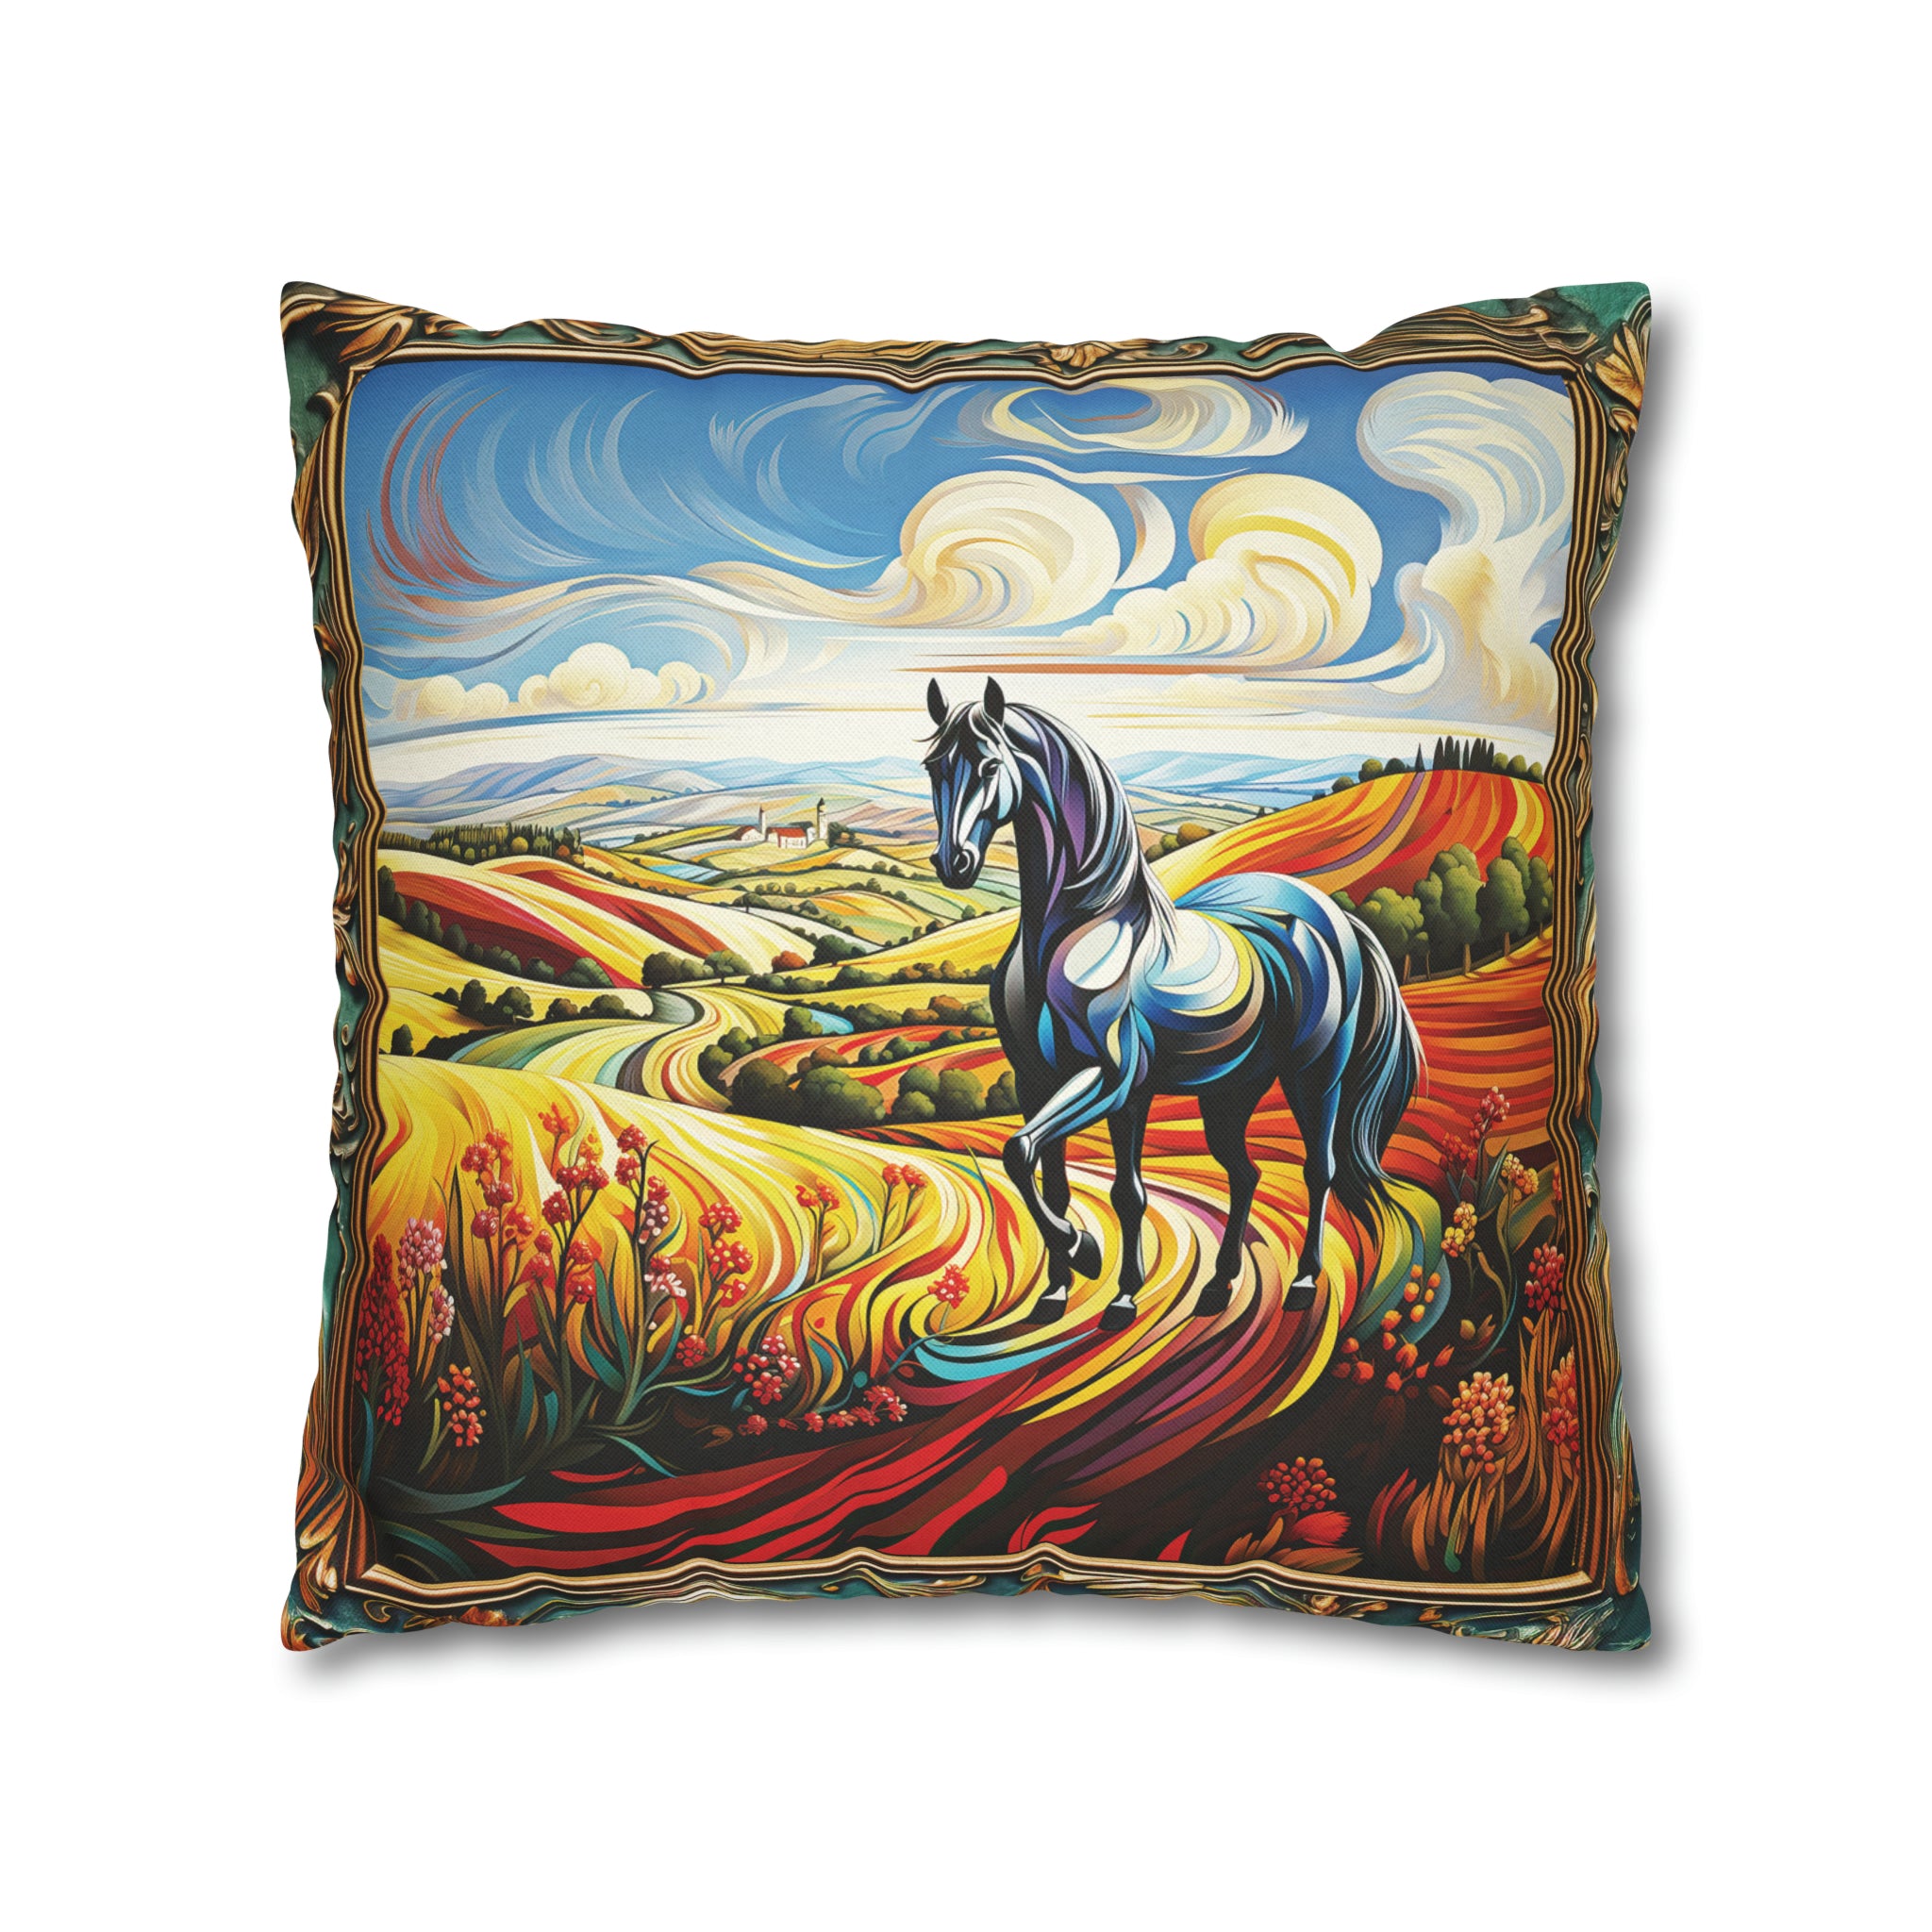 Square Pillow Case 18" x 18", CASE ONLY, no pillow form, original Art ,Colorful, Beautiful Horse on a Rainbow Landscape.